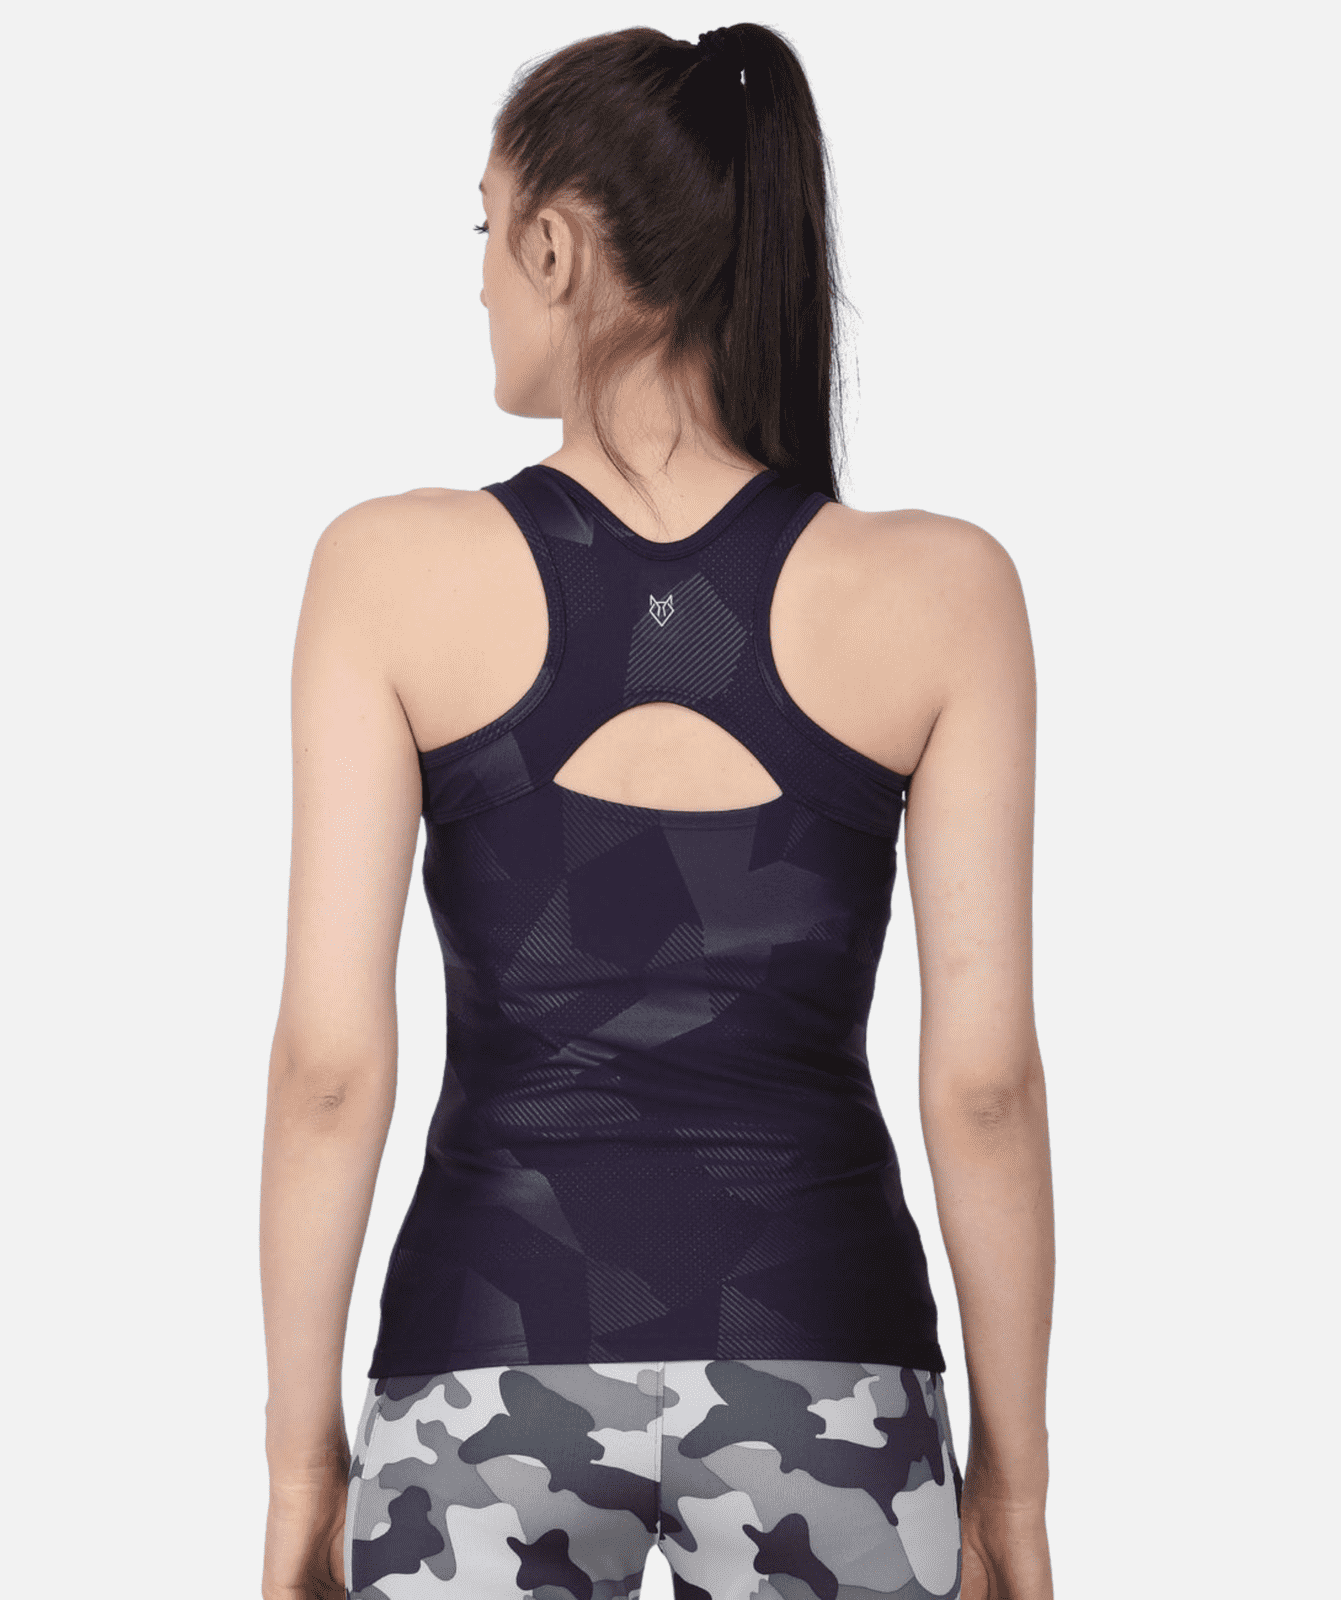 Sleeveless Tanks for Athletes | Full Freedom Movement | Stylish Cuts Women's Upper